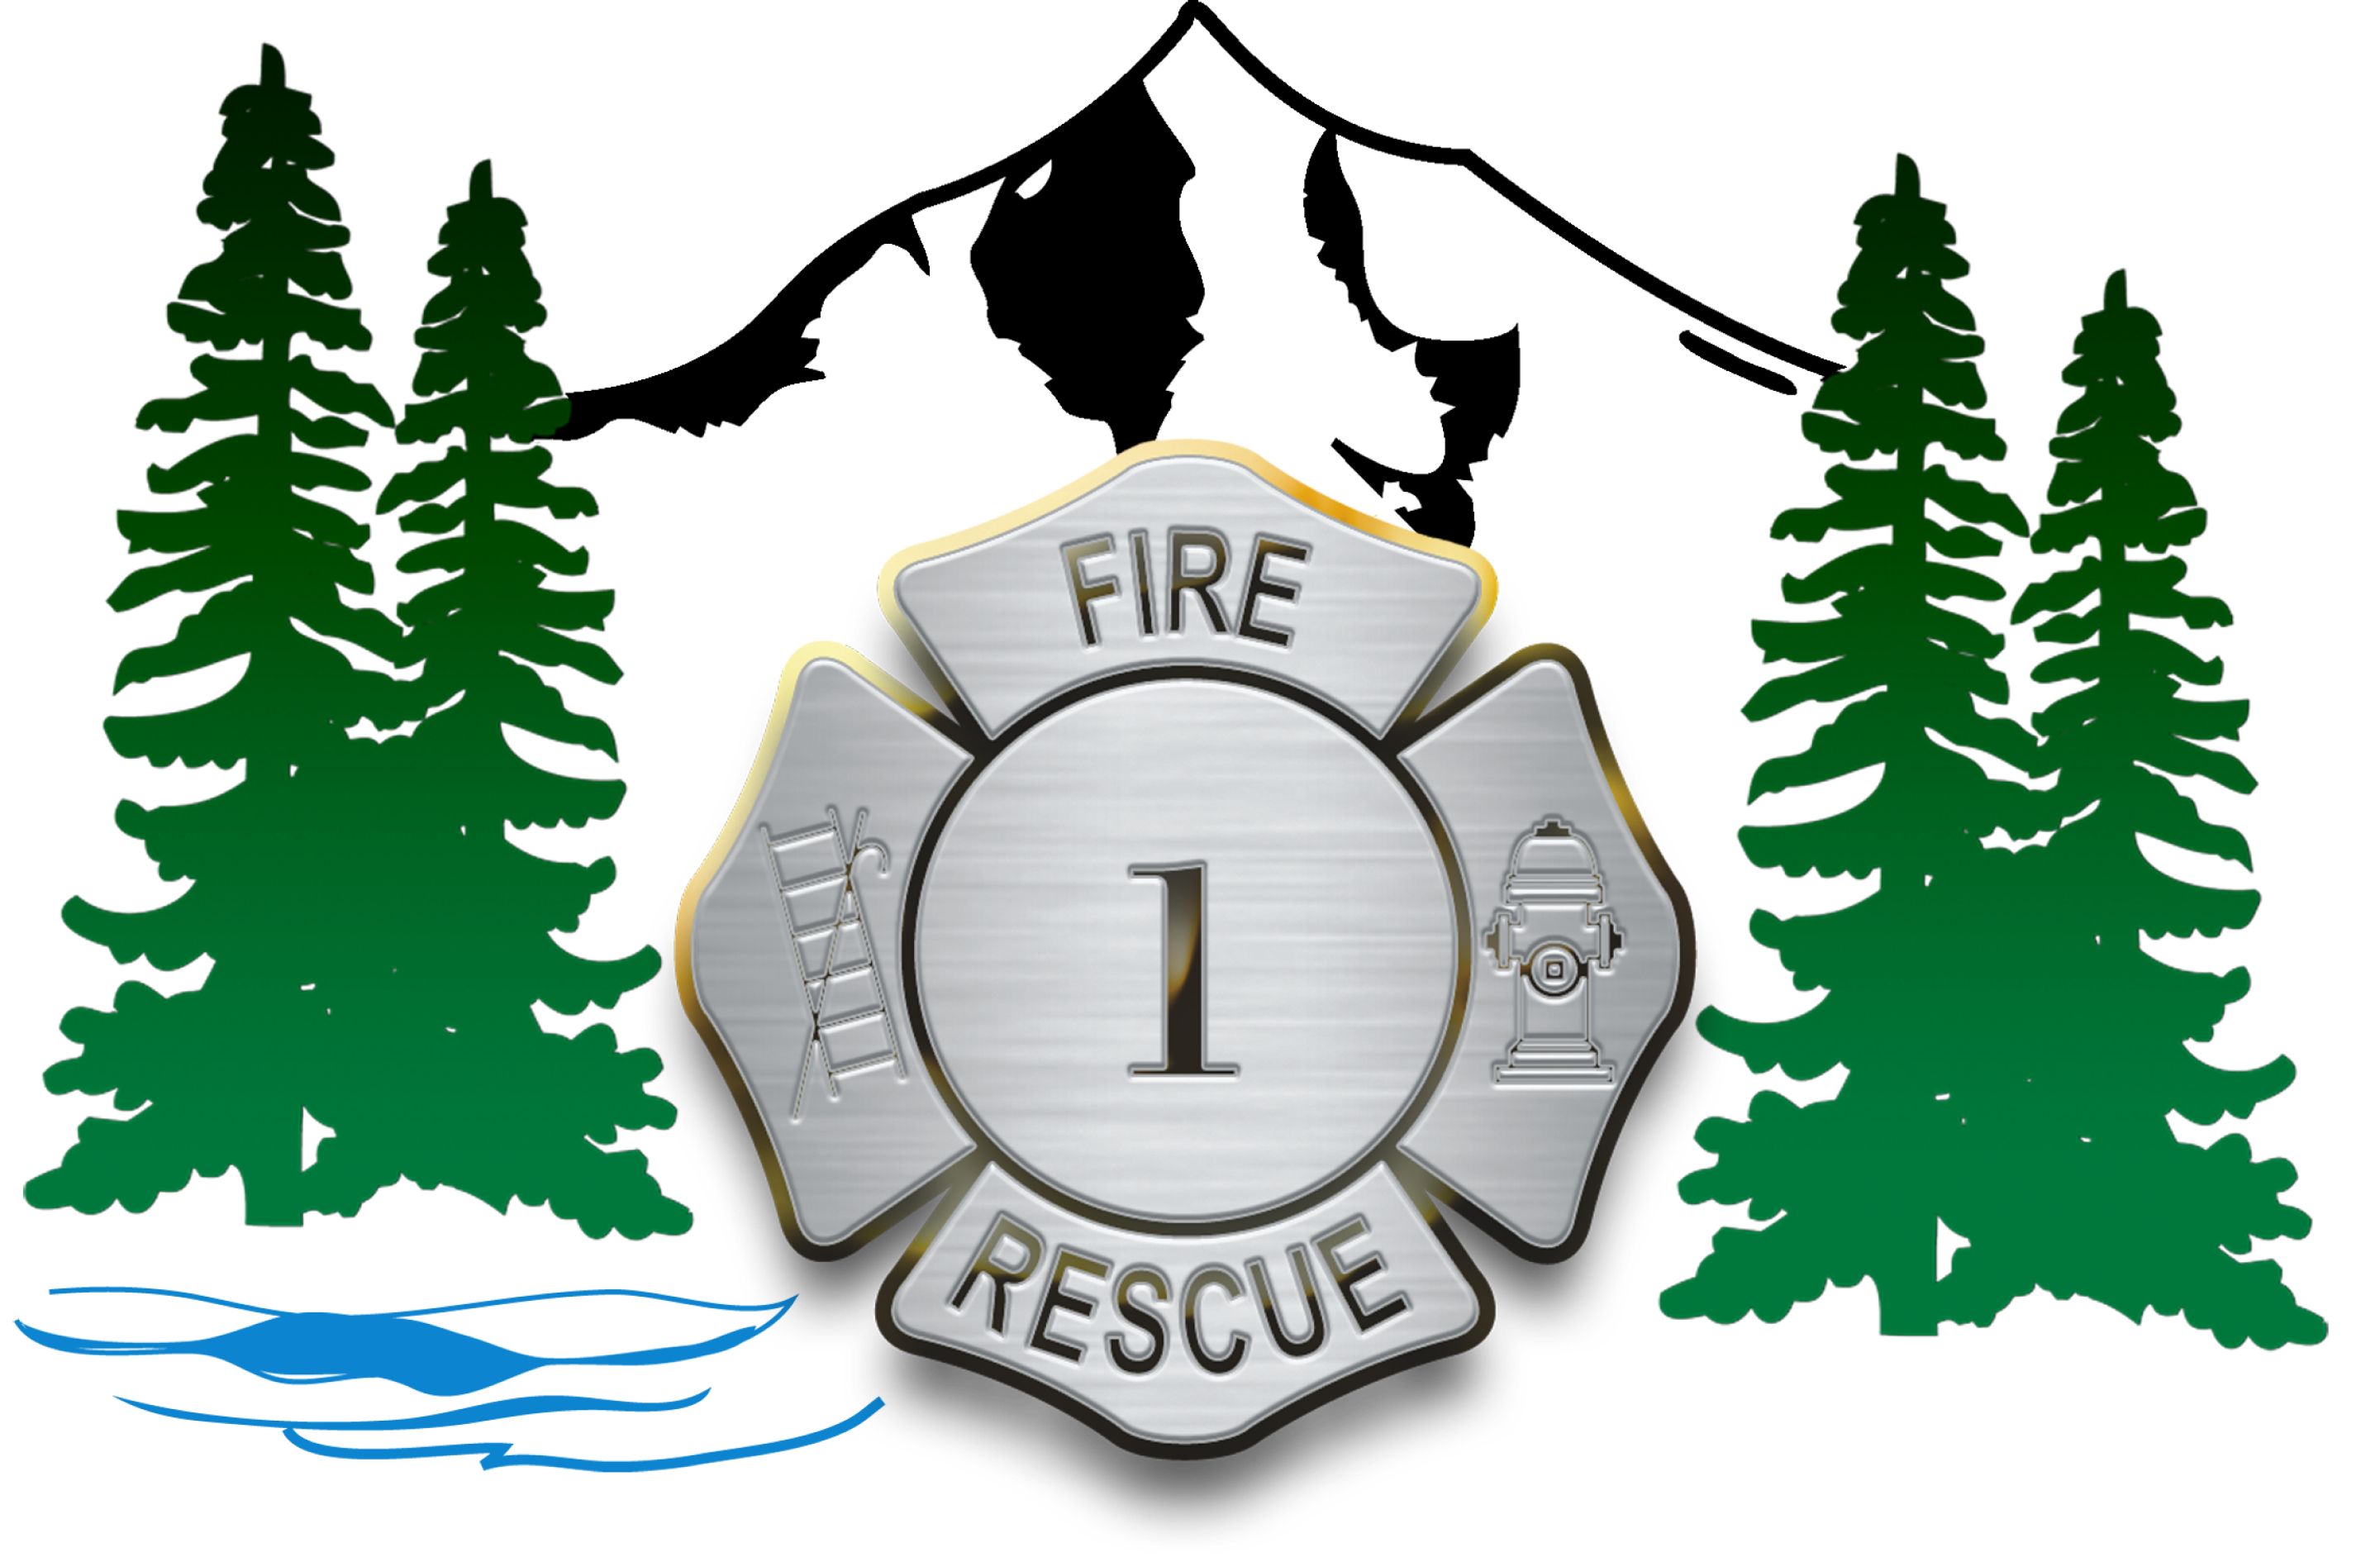 Clackamas Fire District logo